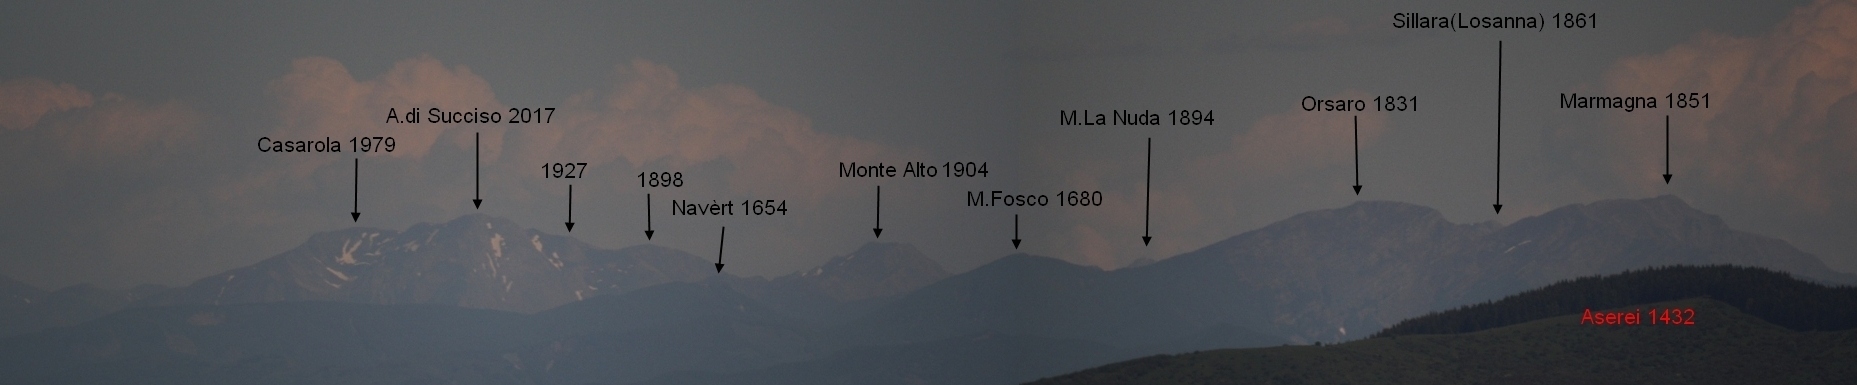 Monte Penice